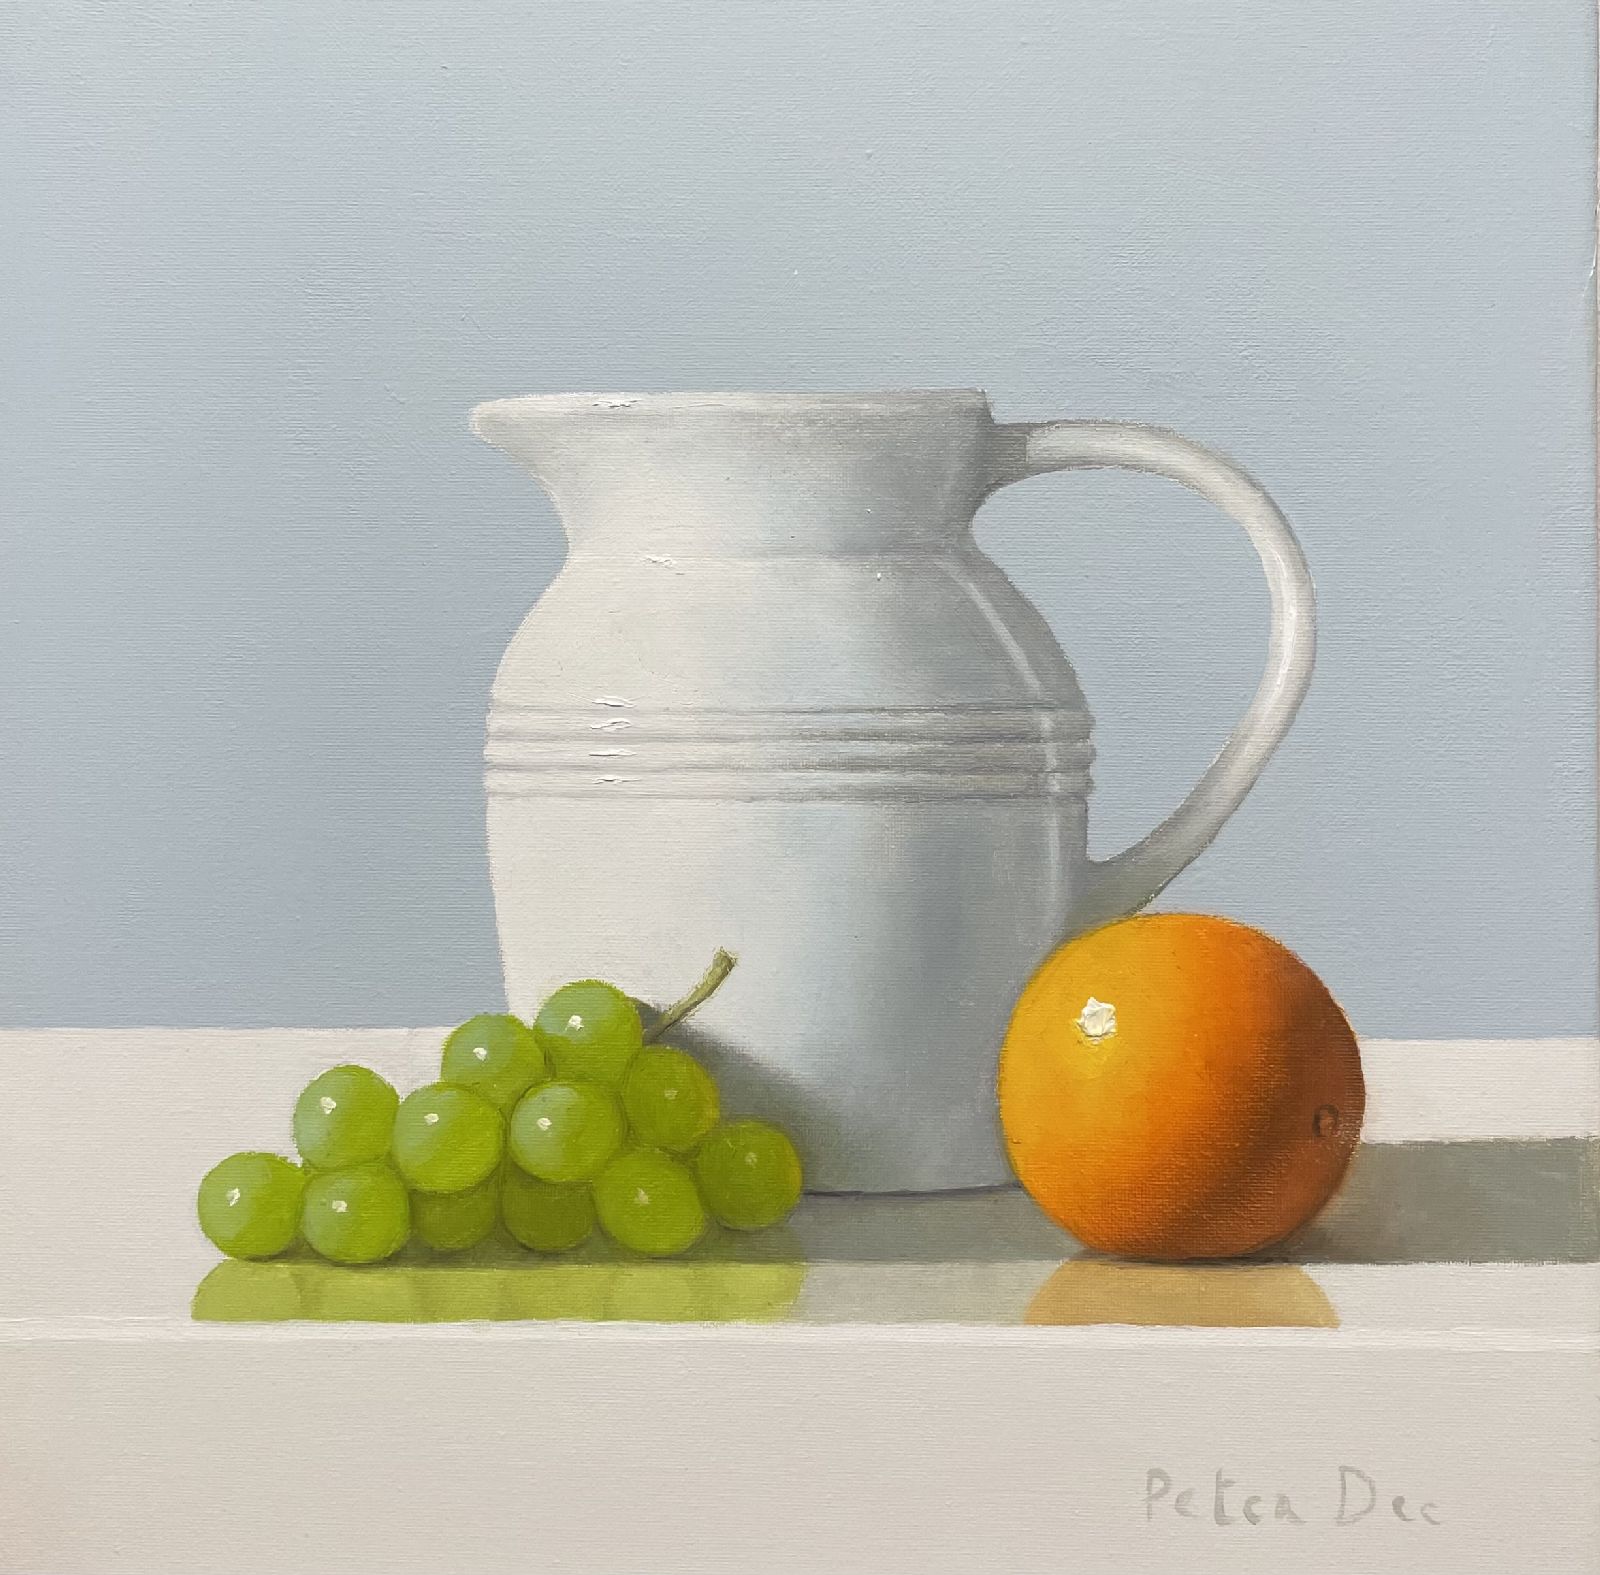 Peter Dee - Ceramic Jug with Orange and Grapes 